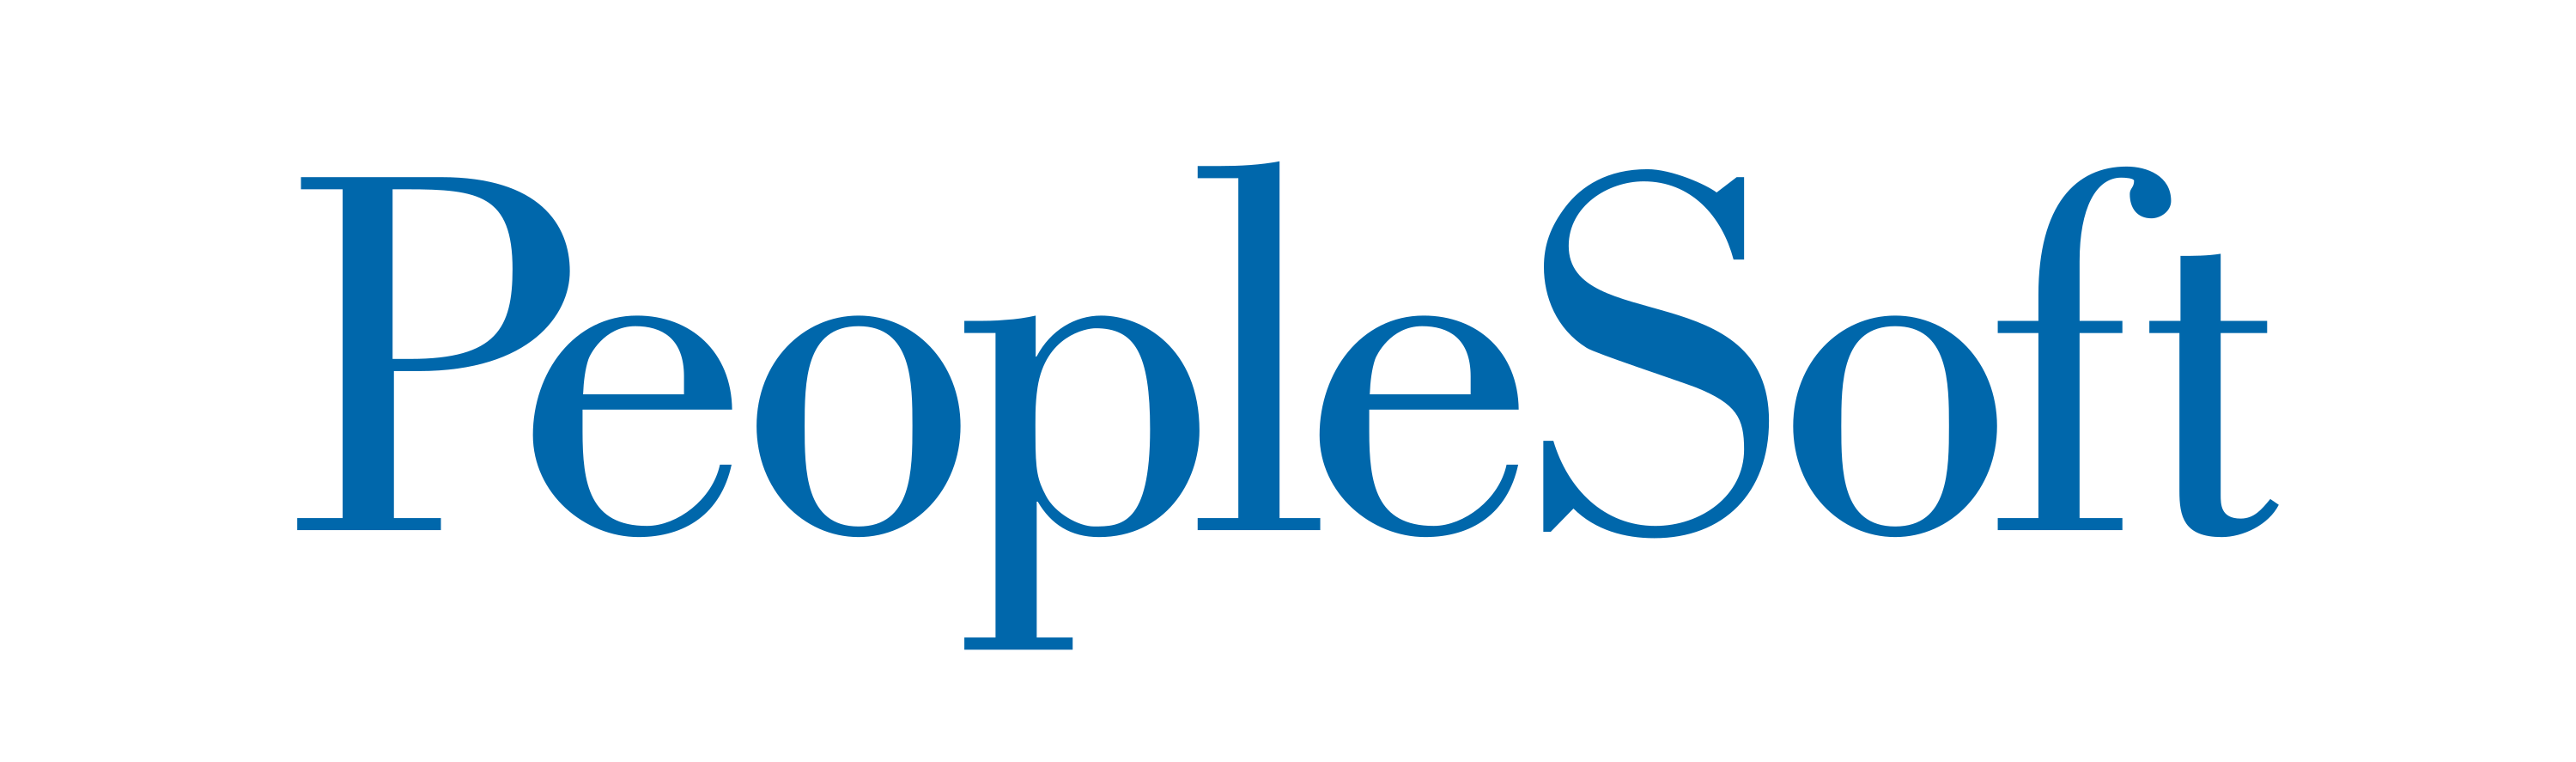 PeopleSoft-Logo